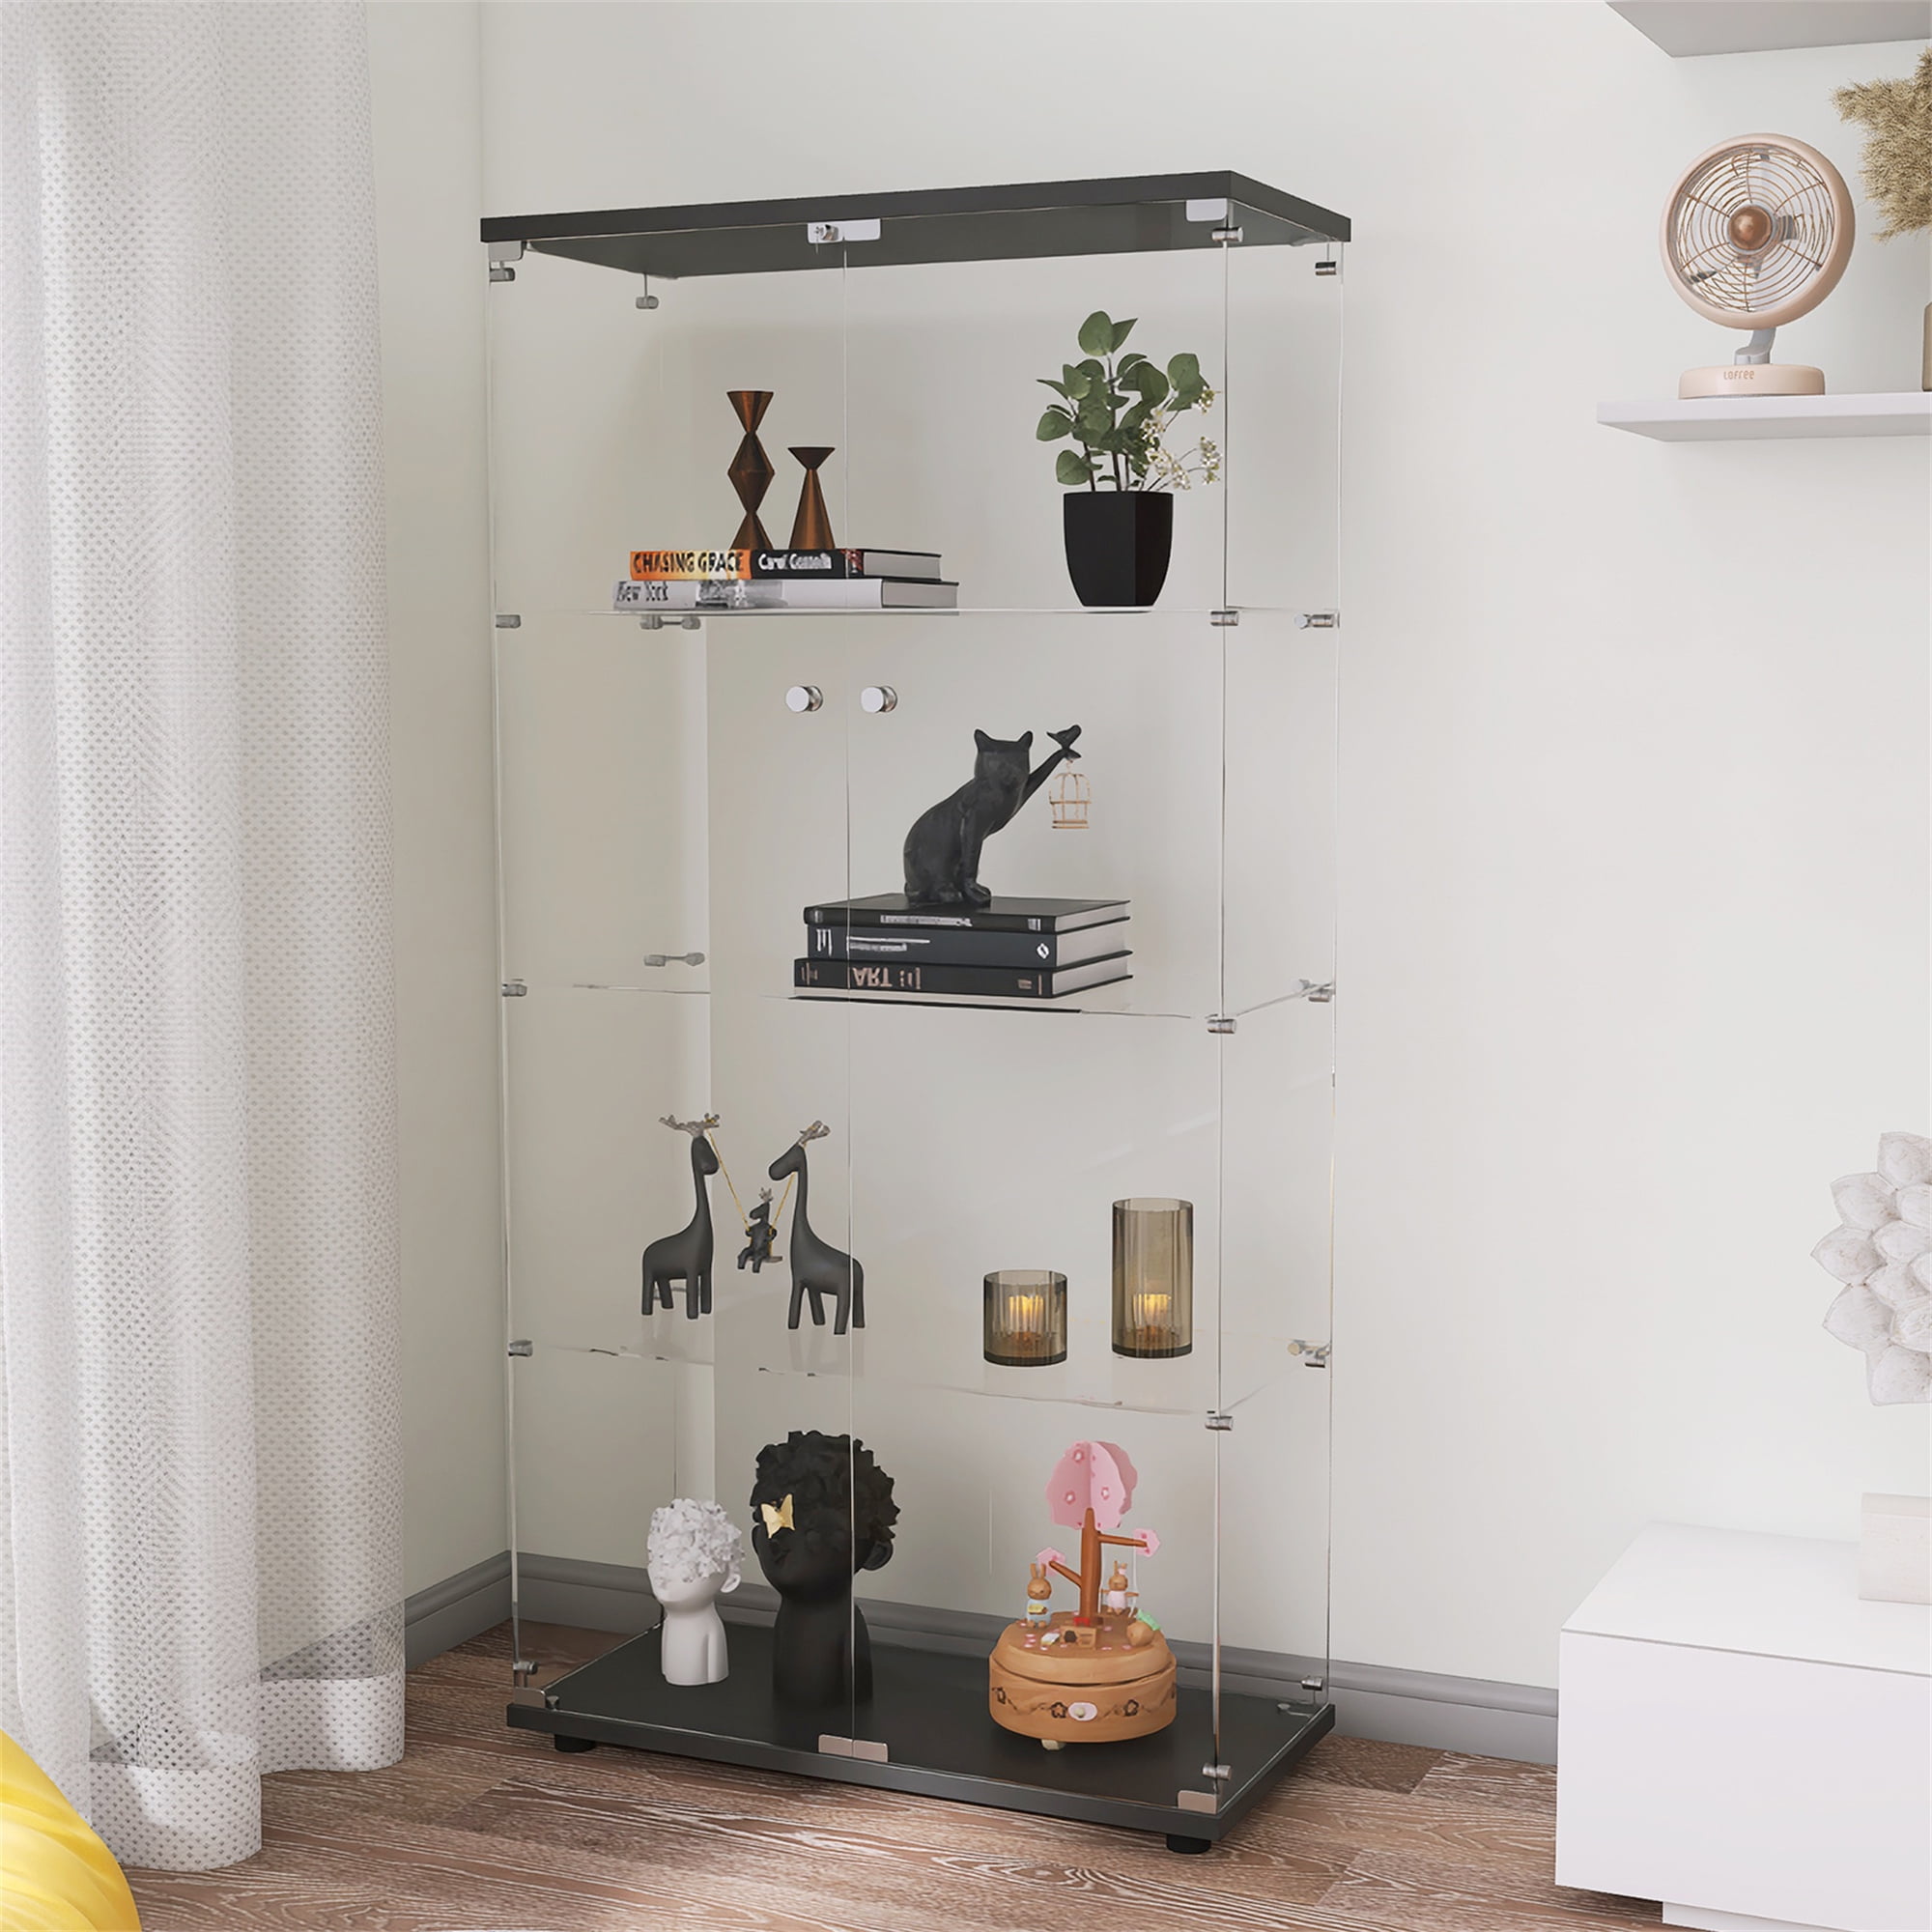 JASMODER Black Glass Cabinet Display Case 4 Shelves with Door